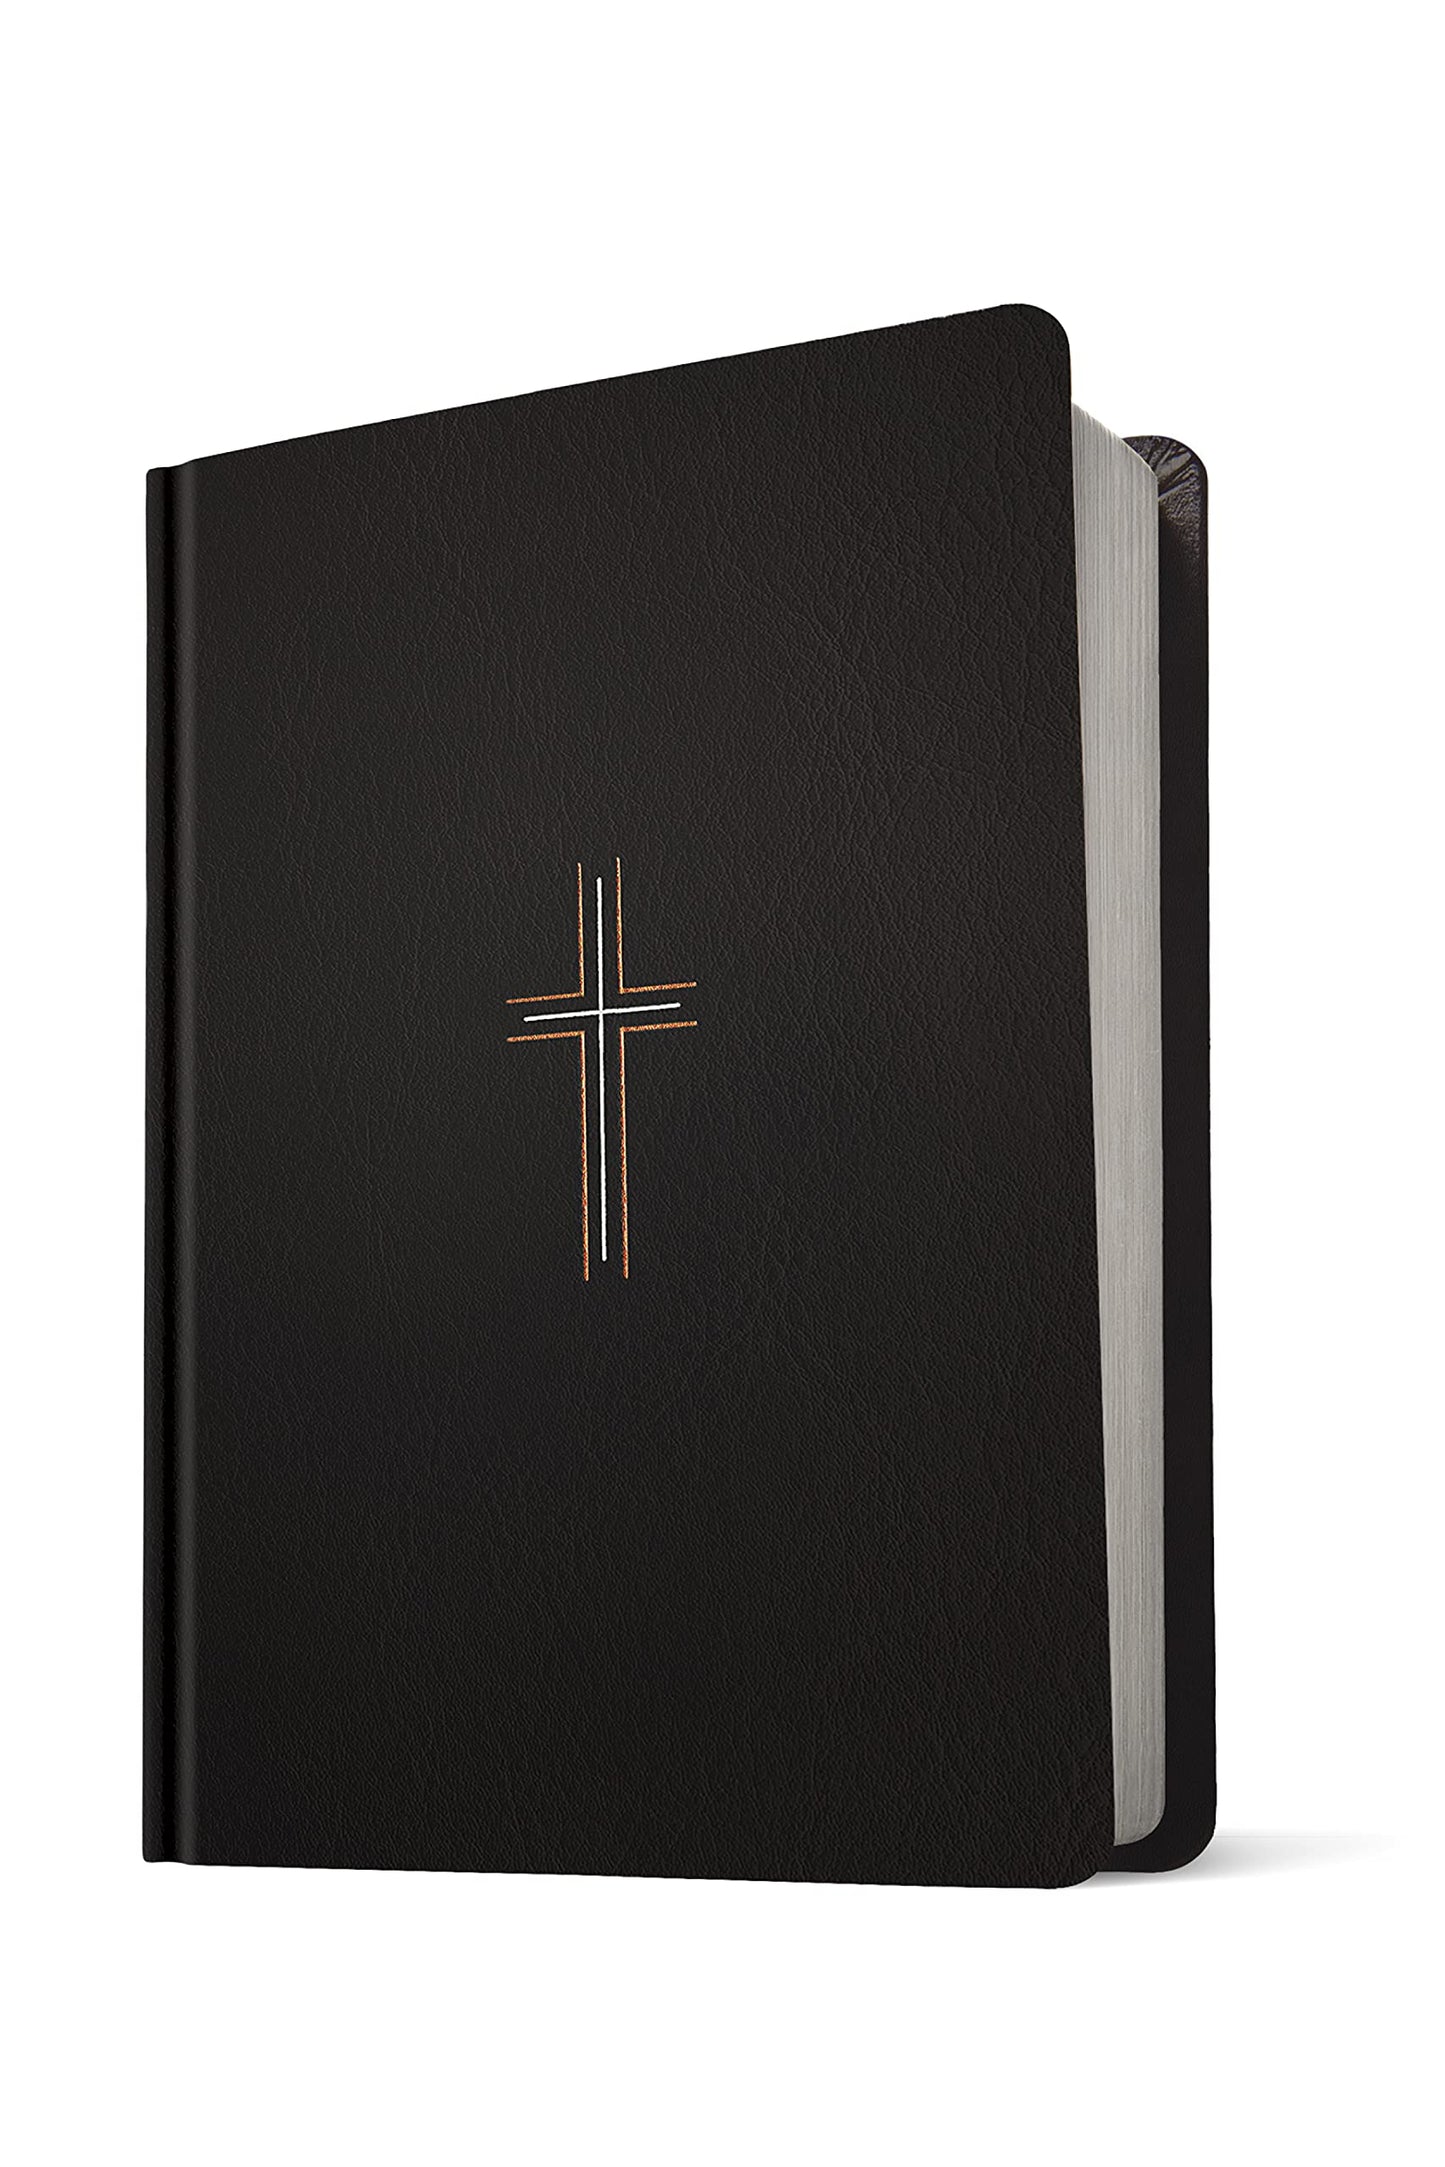 NLT Wide Margin Journaling Edition Hardcover Filament Enabled Black Cross